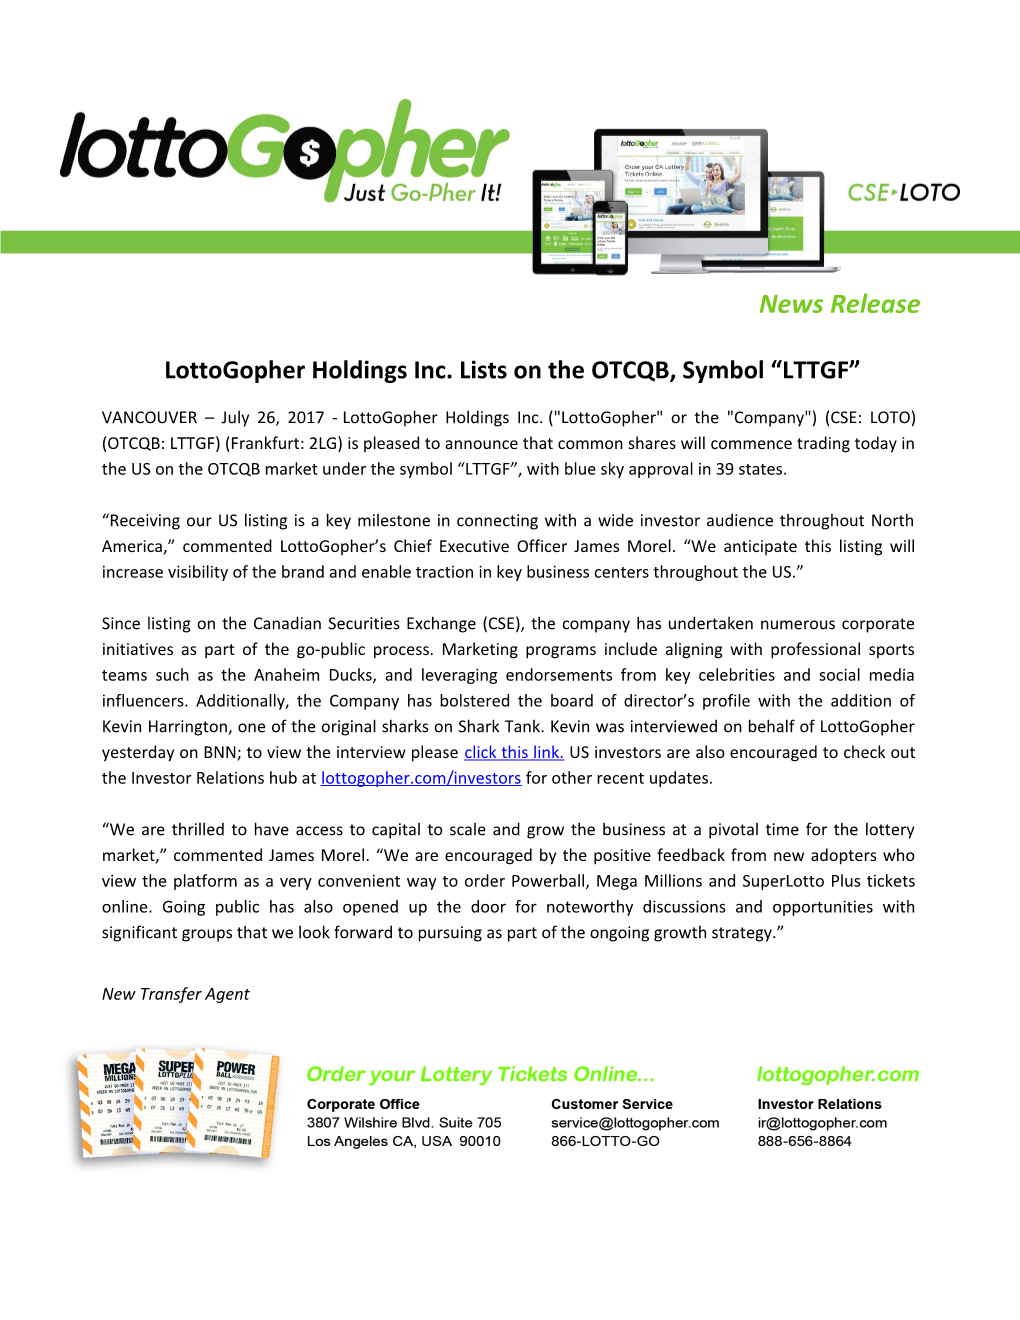 Lottogopher Holdings Inc. Lists on the OTCQB, Symbol LTTGF